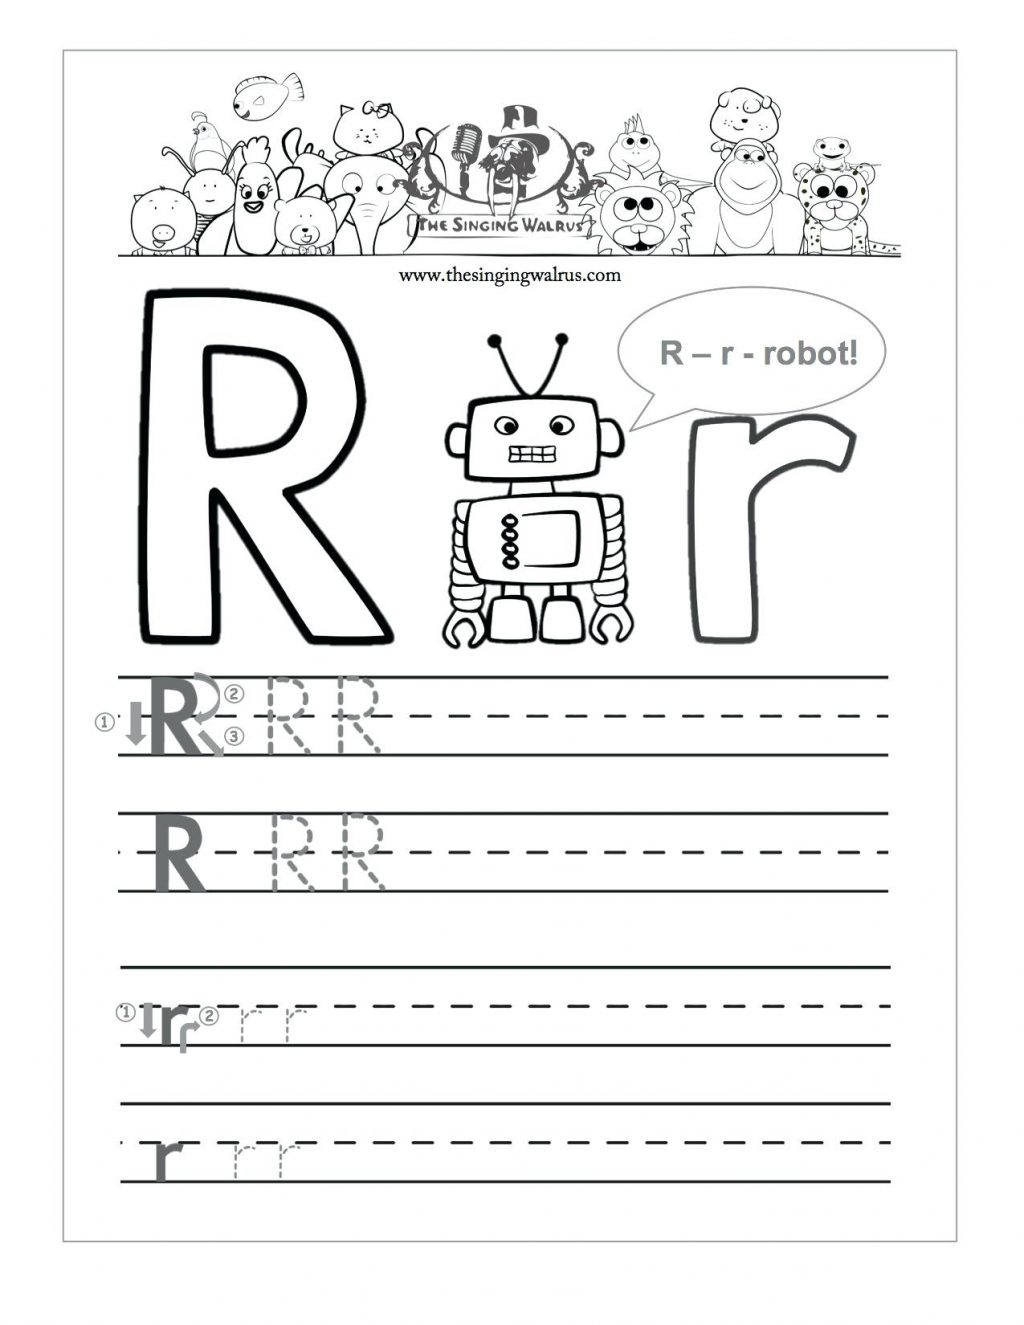 Az Worksheets For Kindergarten Letter R Tracing Worksheet with R Letter Worksheets